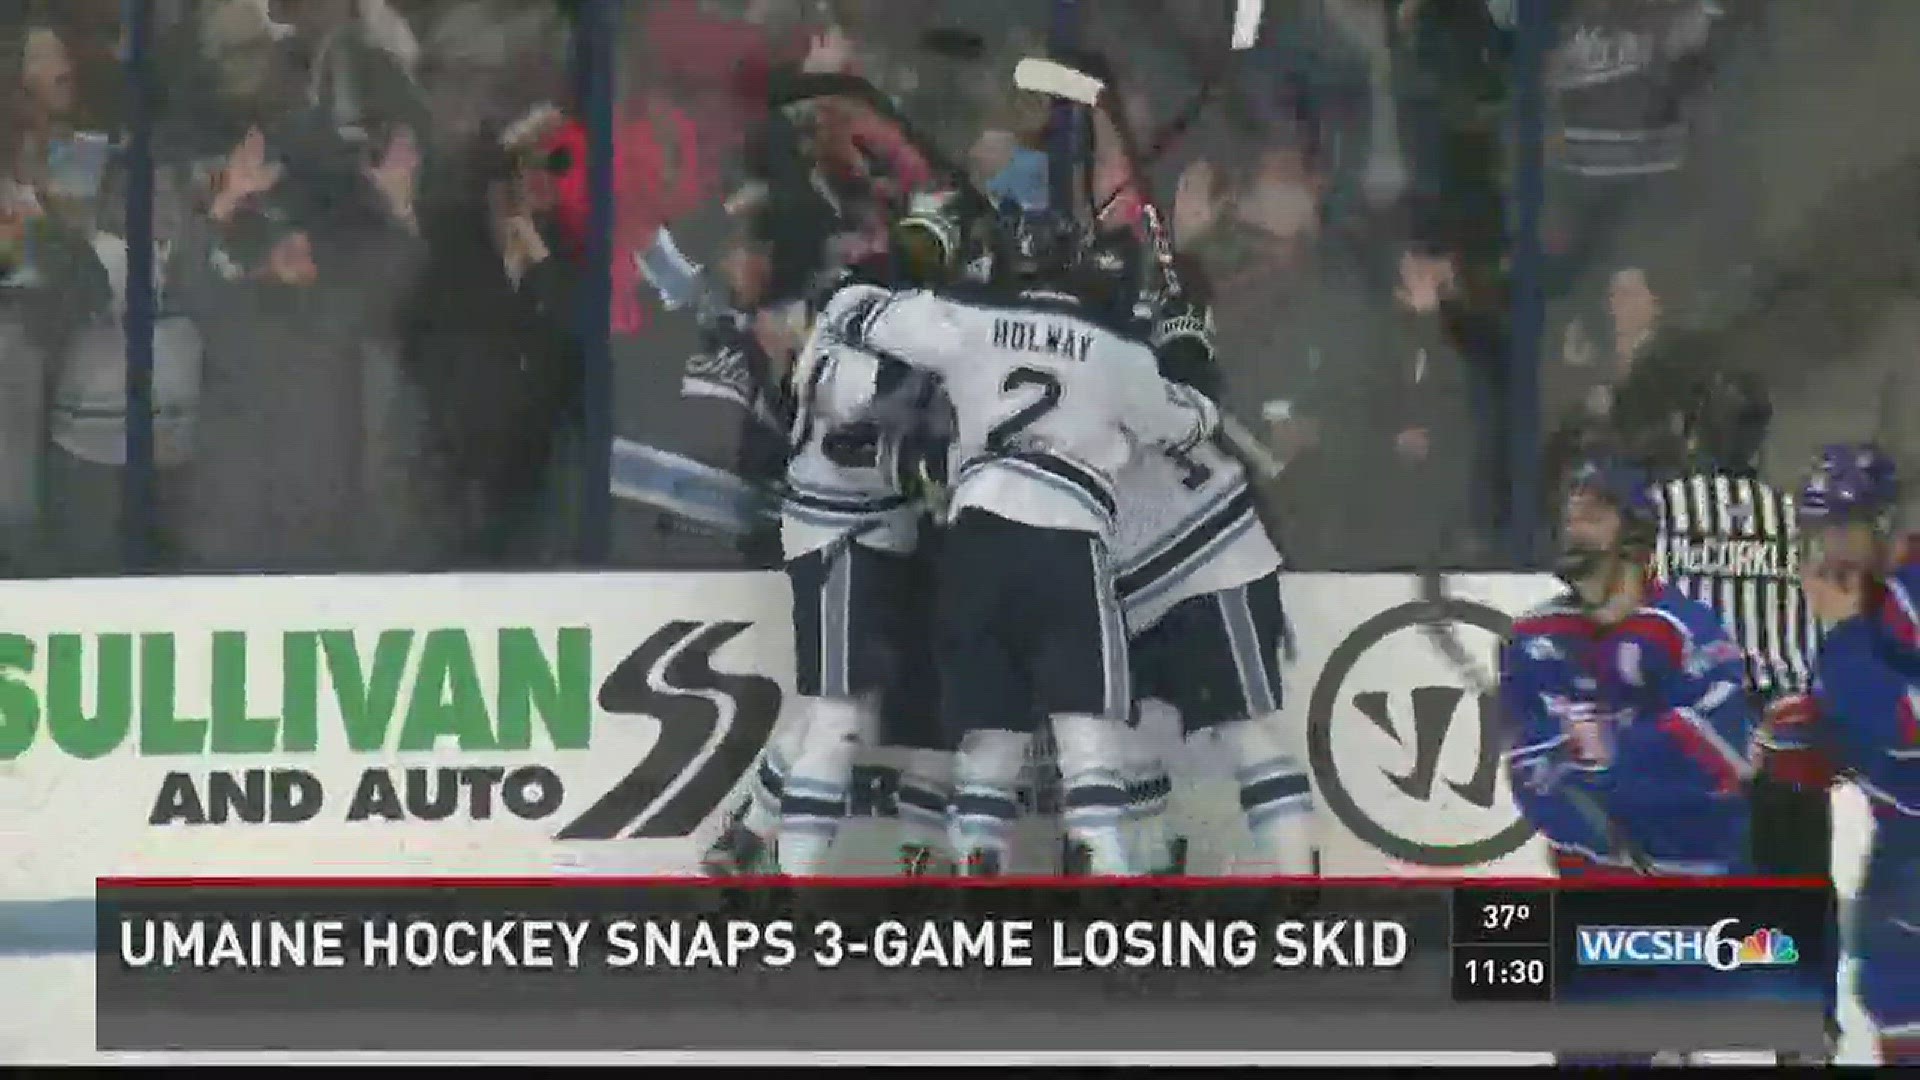 UMaine hockey snaps 3-game losing skid